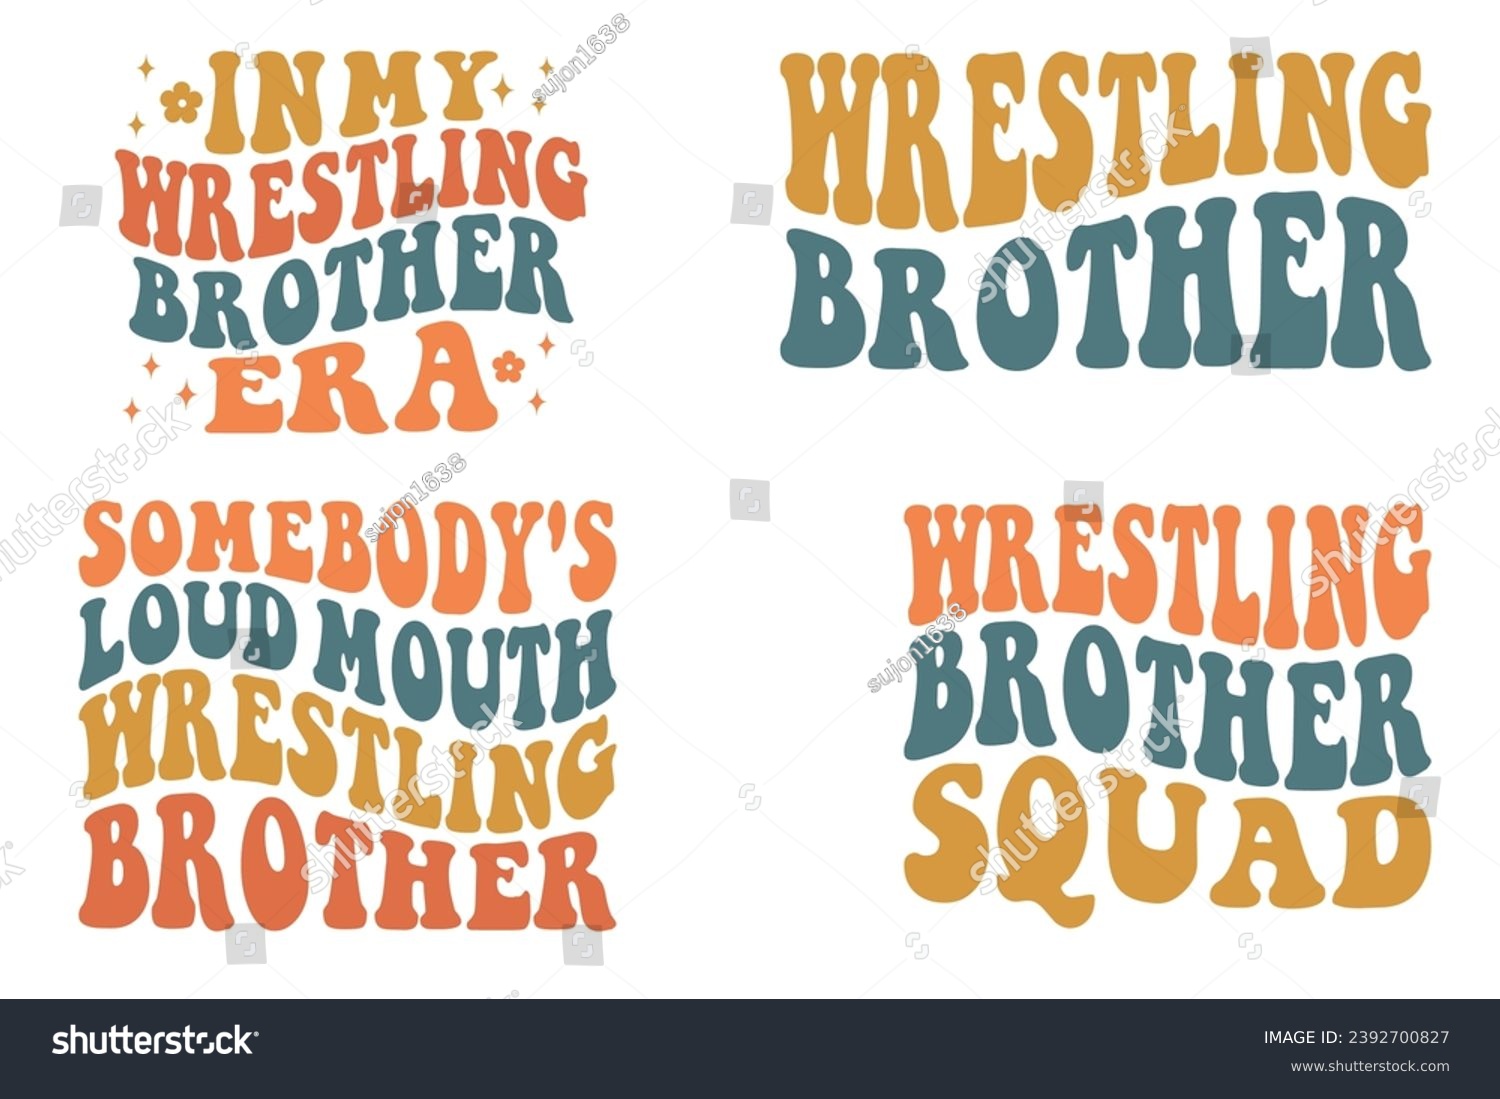 SVG of In My Wrestling Brother Era, Wrestling Brother, Somebody's Loud Mouth Wrestling Brother, Wrestling Brother Squad retro wavy T-shirt designs svg